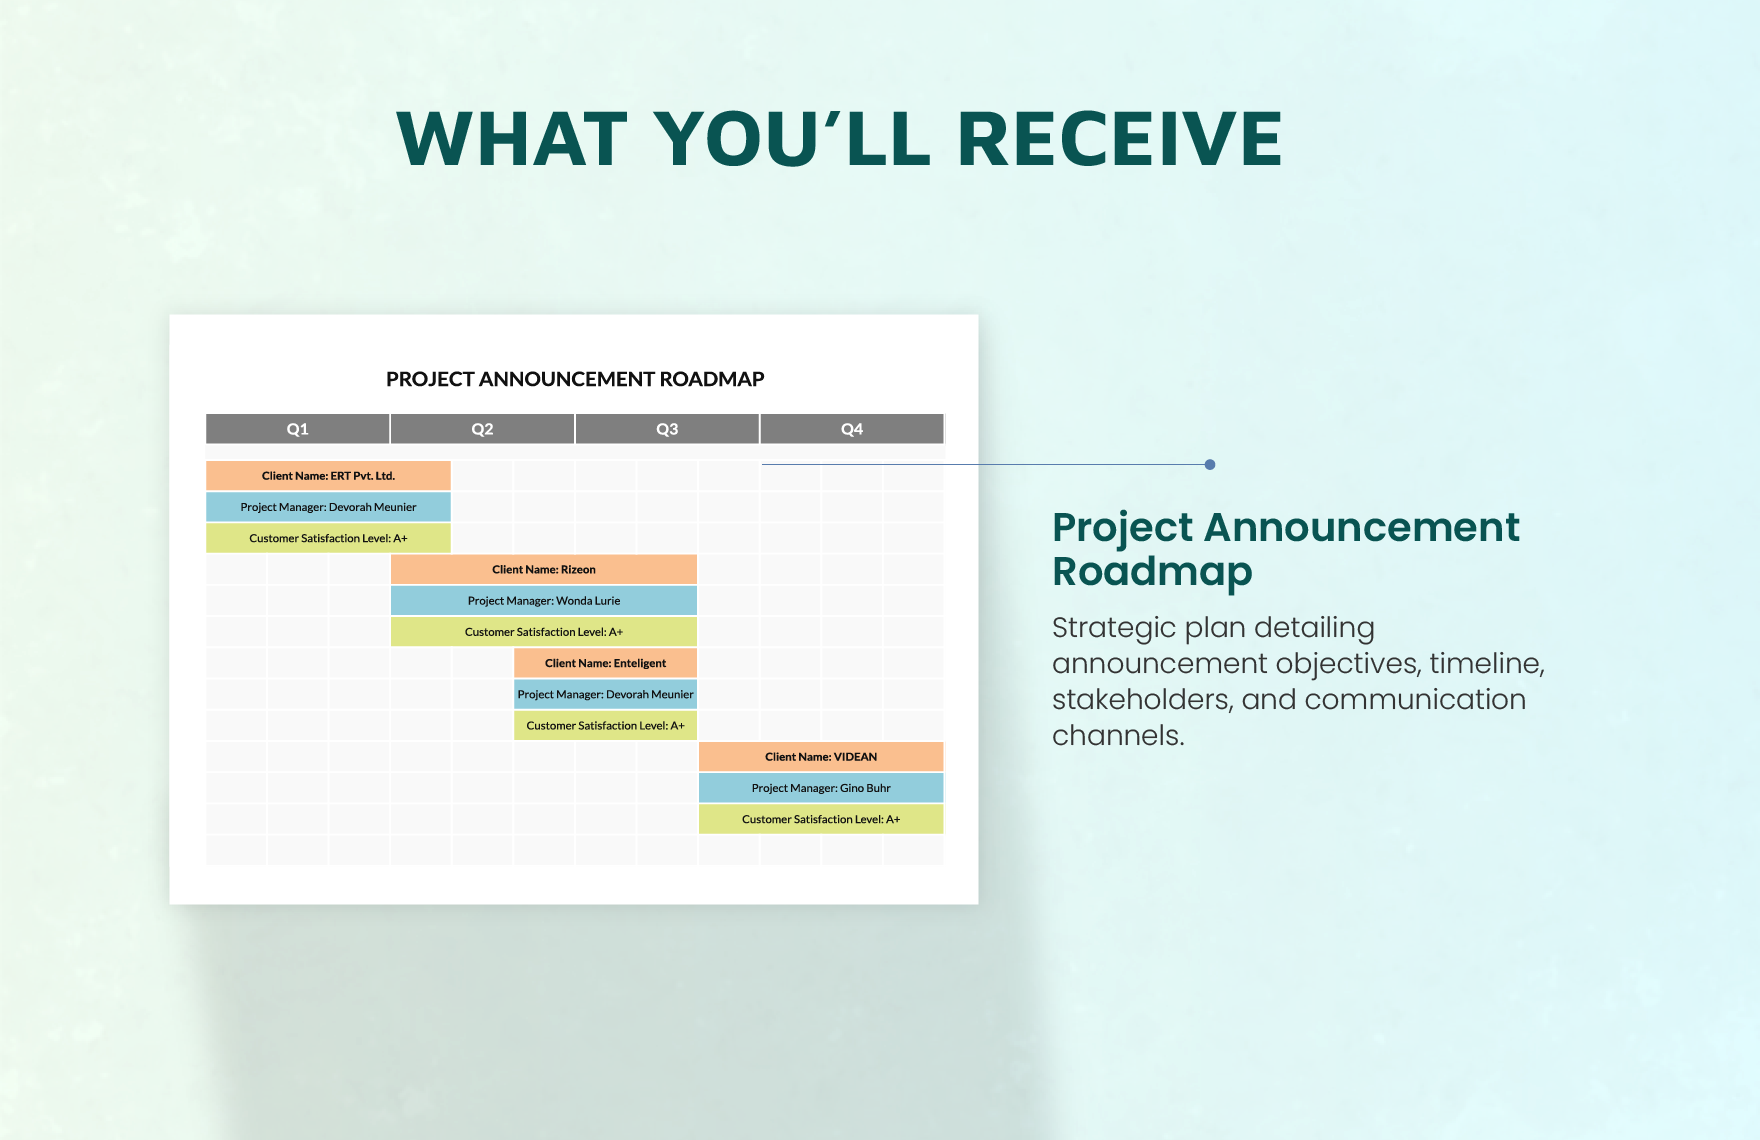 Project Announcement Roadmap Template